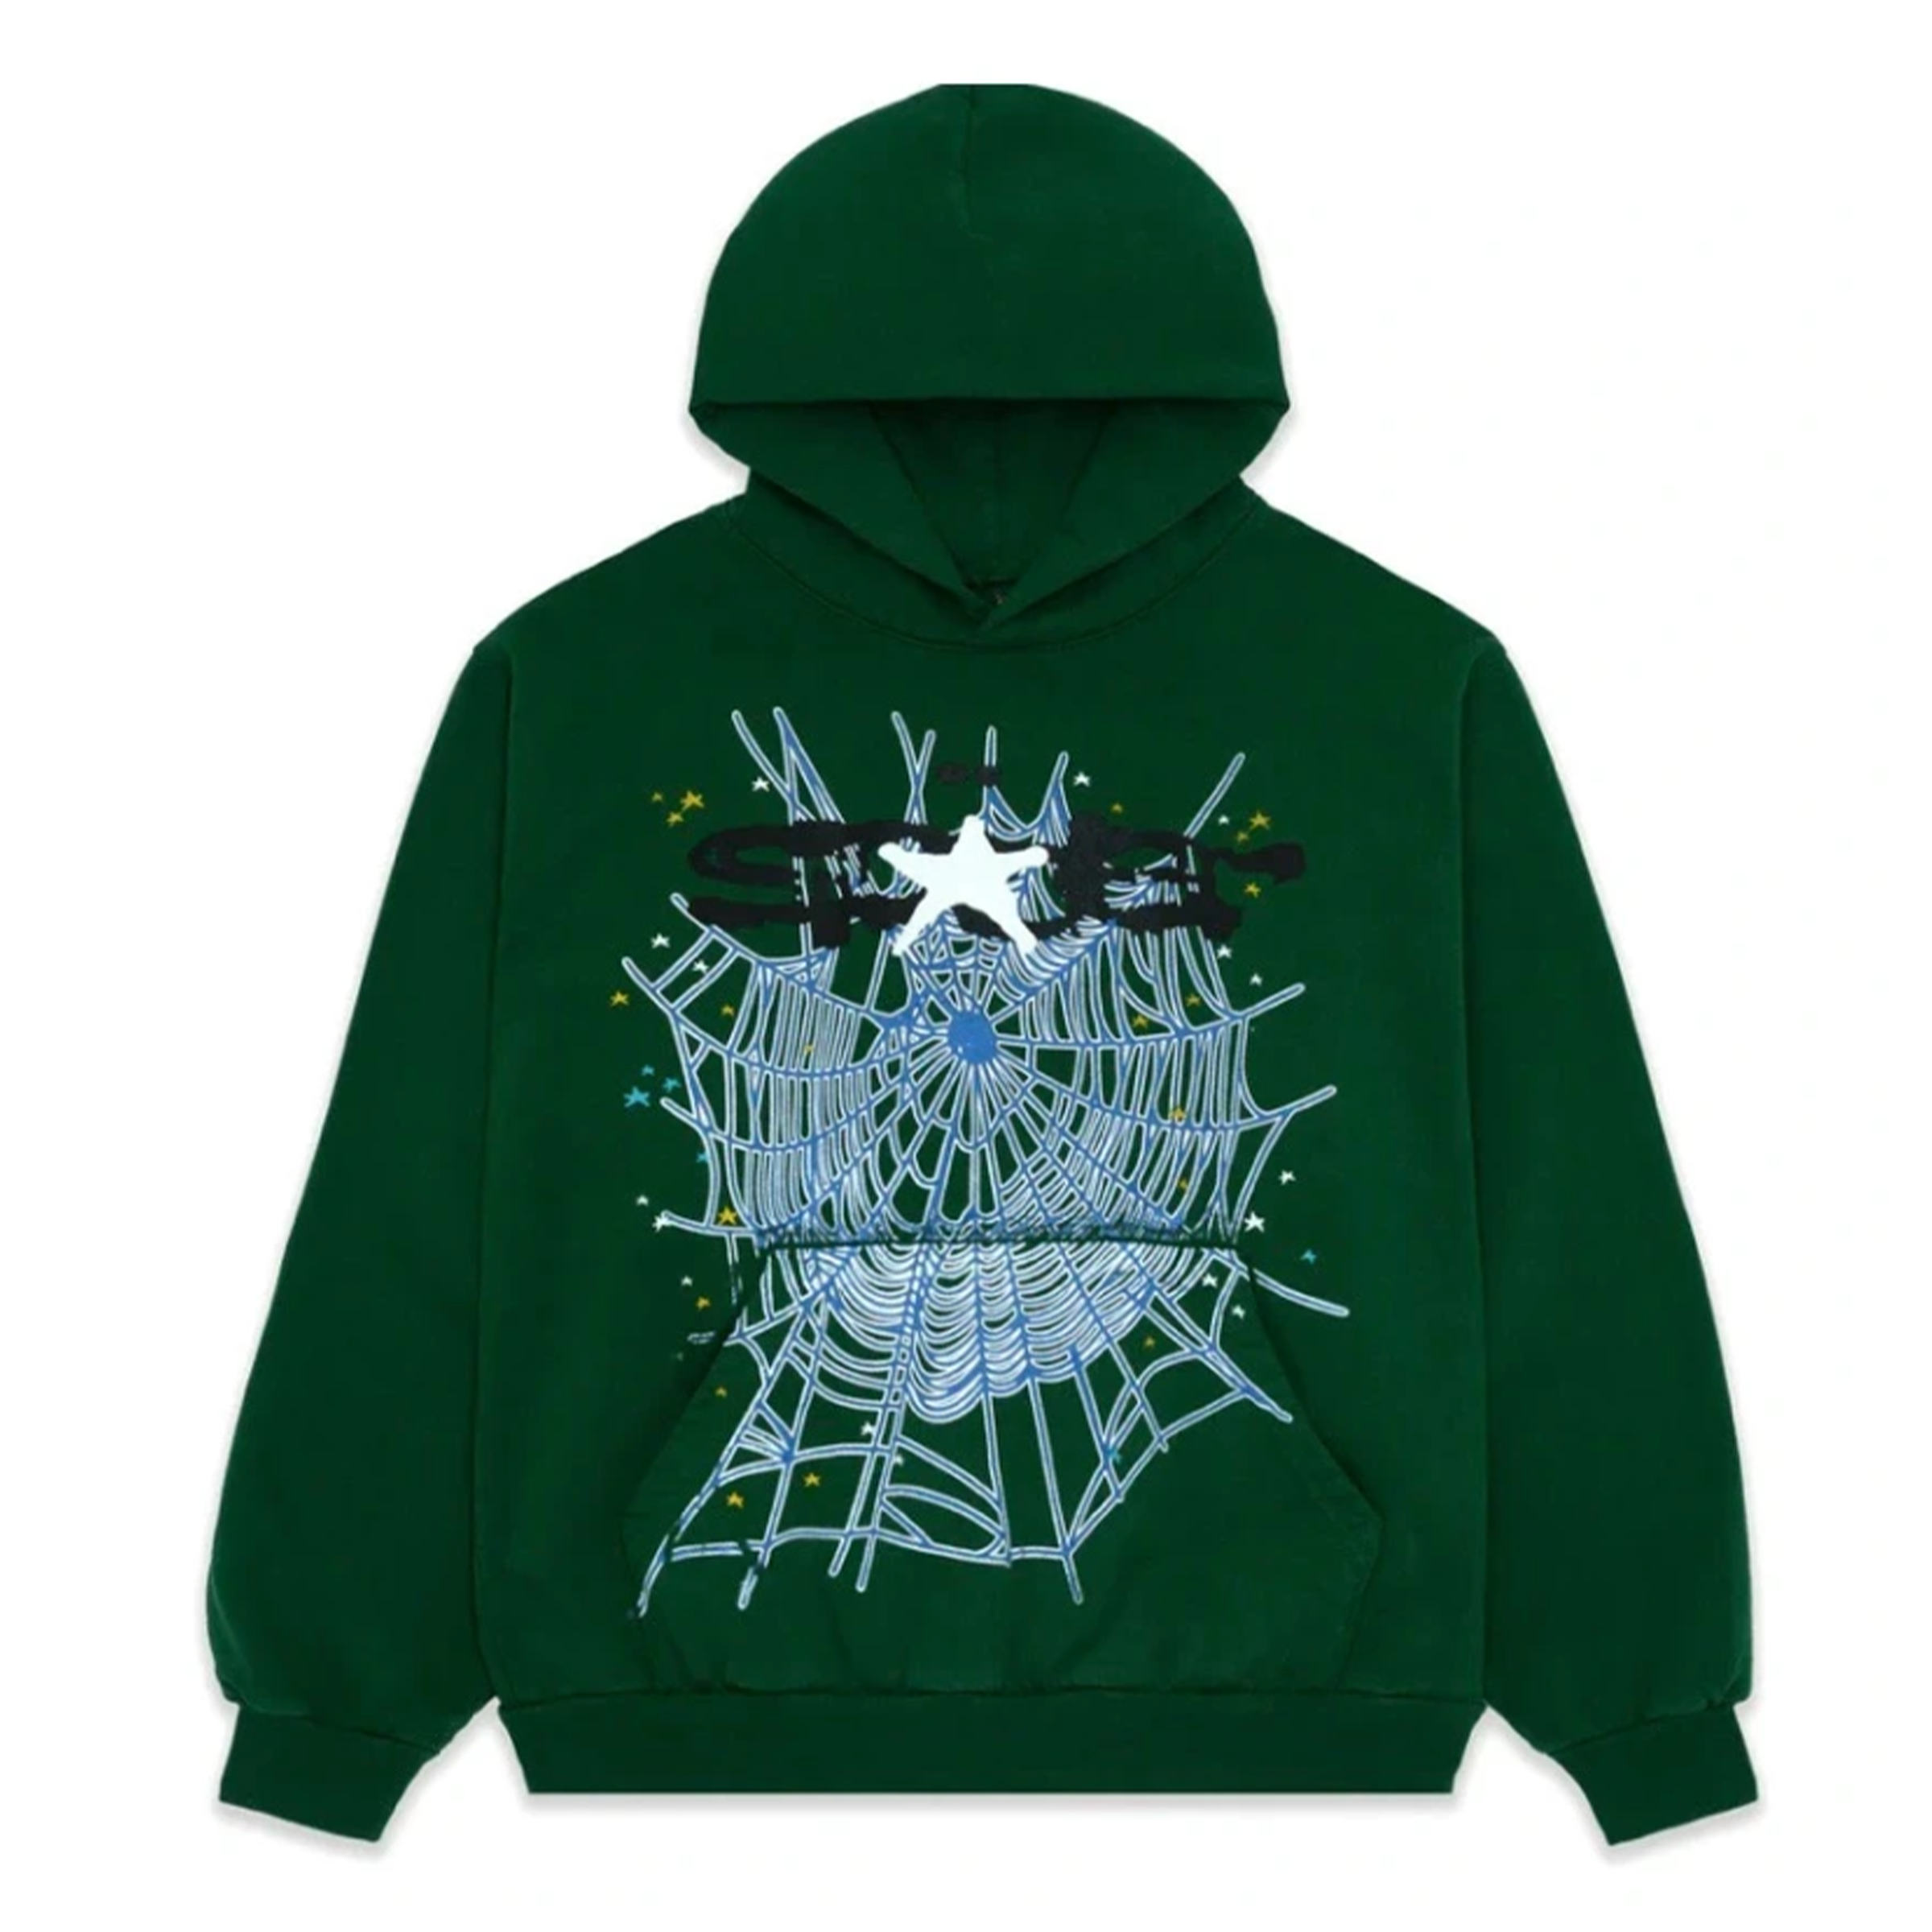 Sp5der "Web3" Hooded Sweatshirt